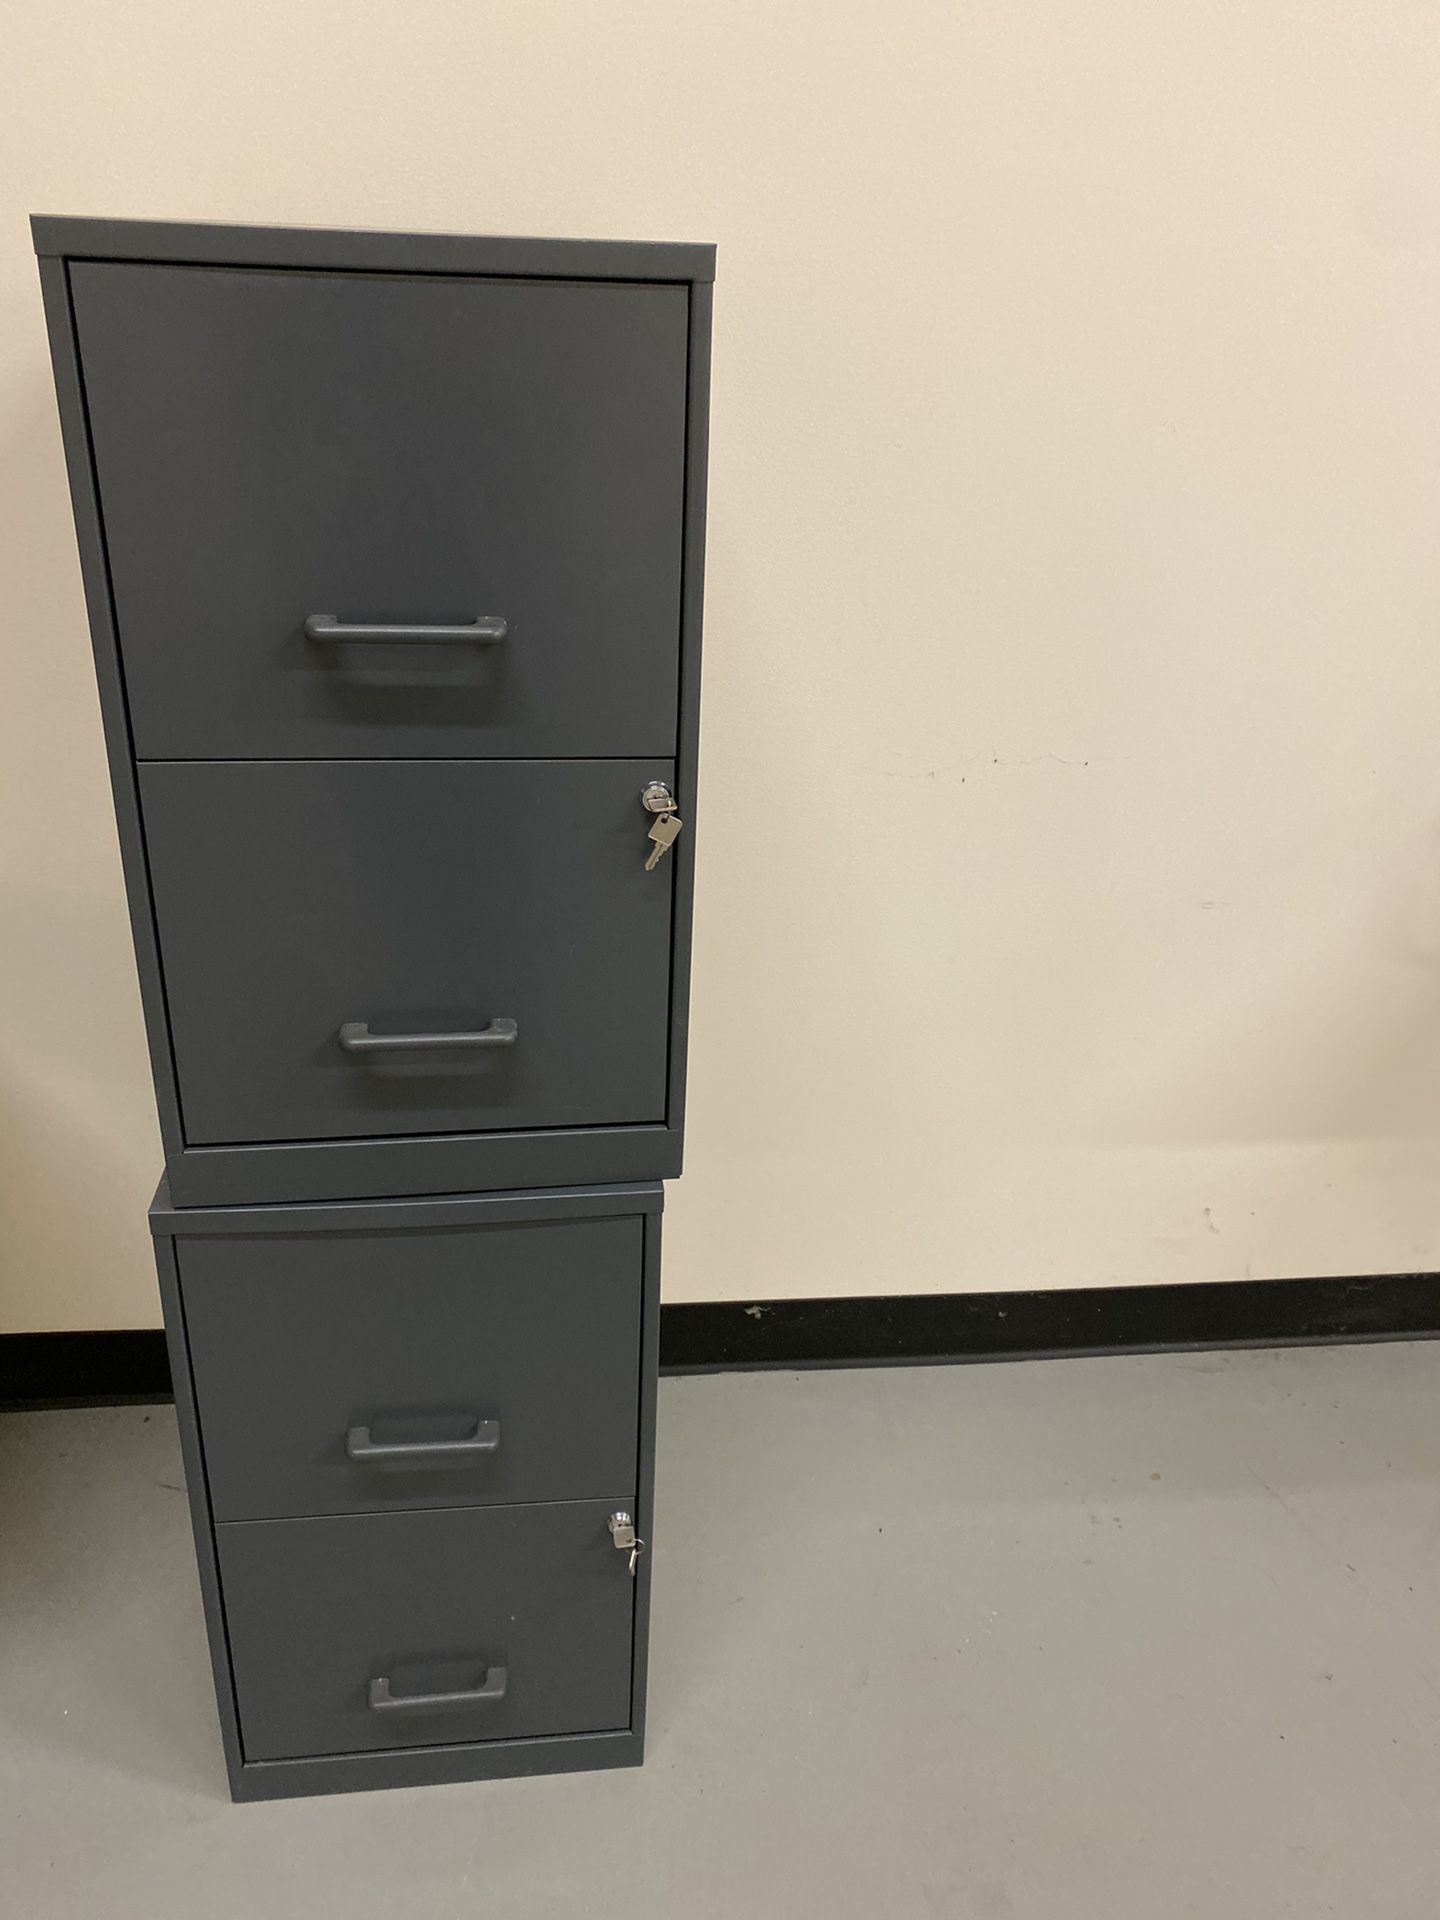 2 sets of 2 drawer file cabinets